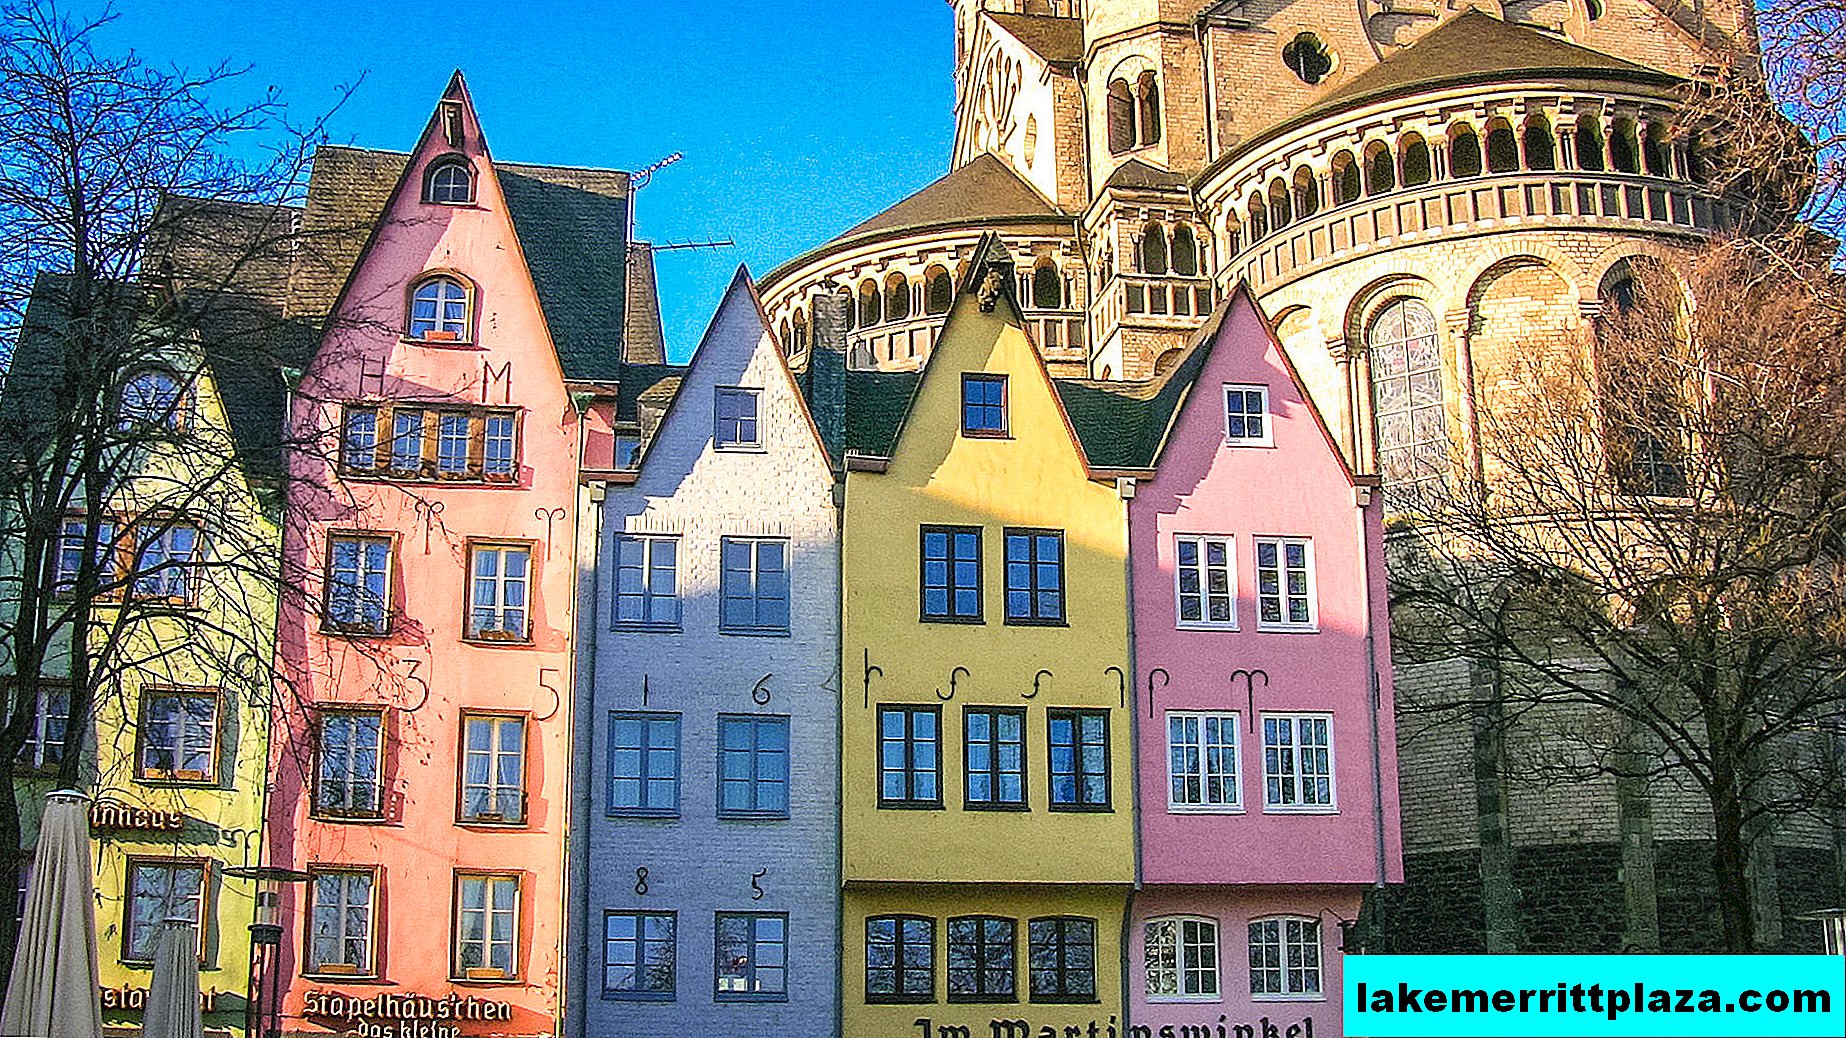 Germany: Old city